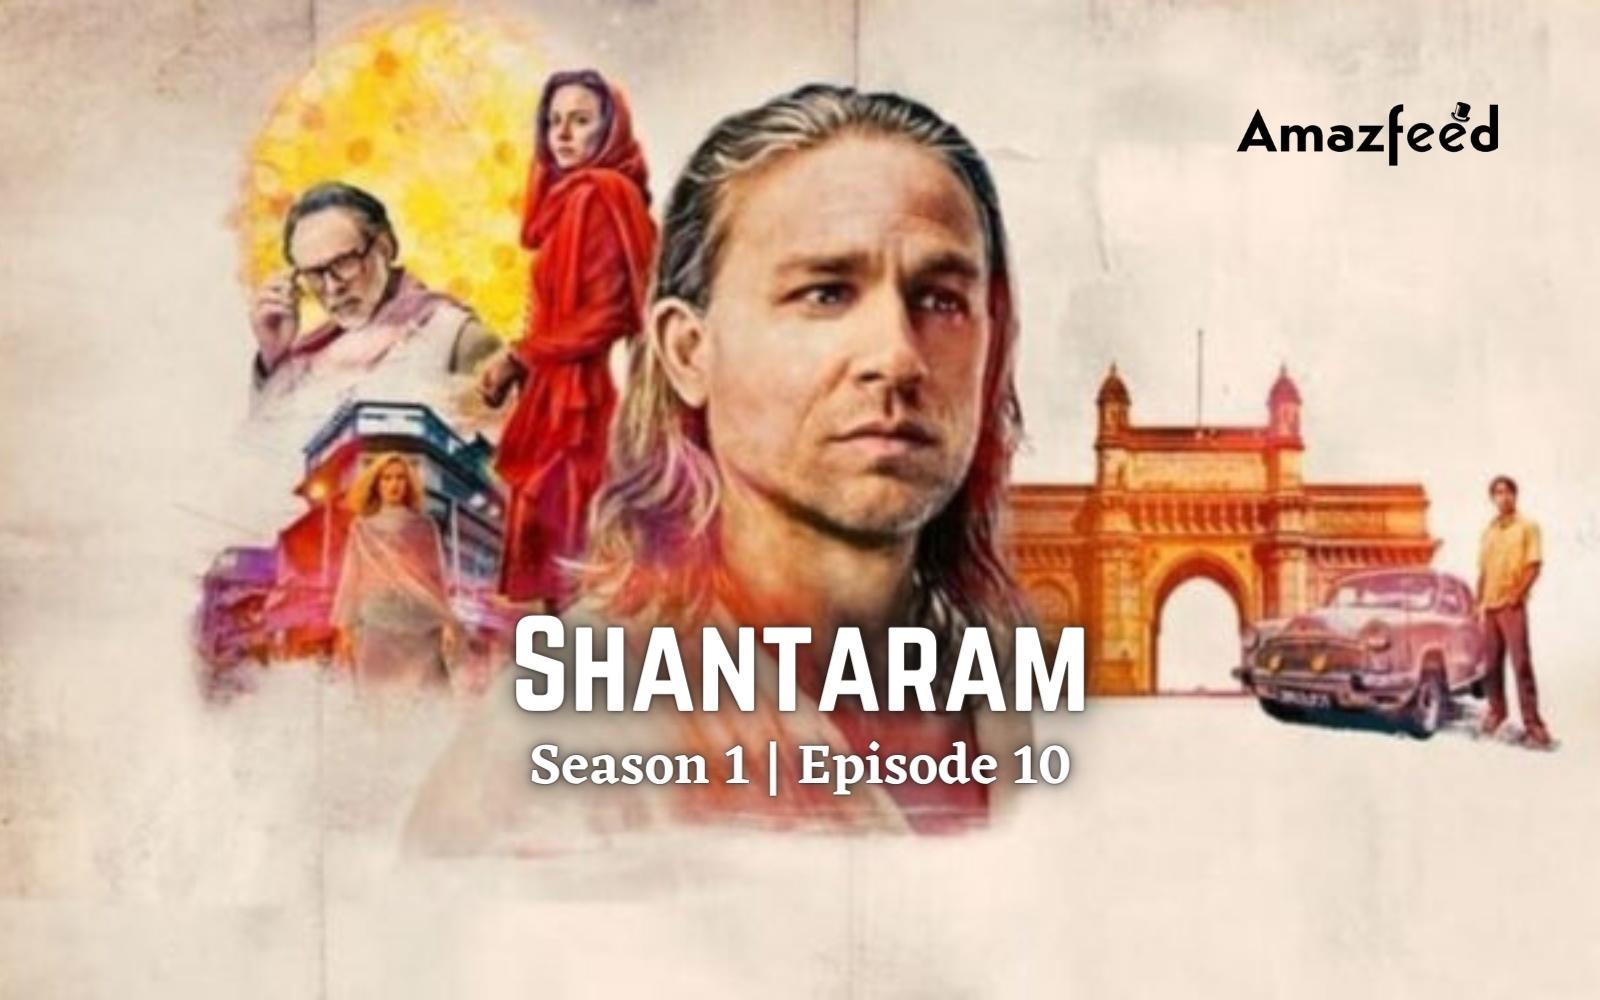 Shantaram Season 1 Episode 10